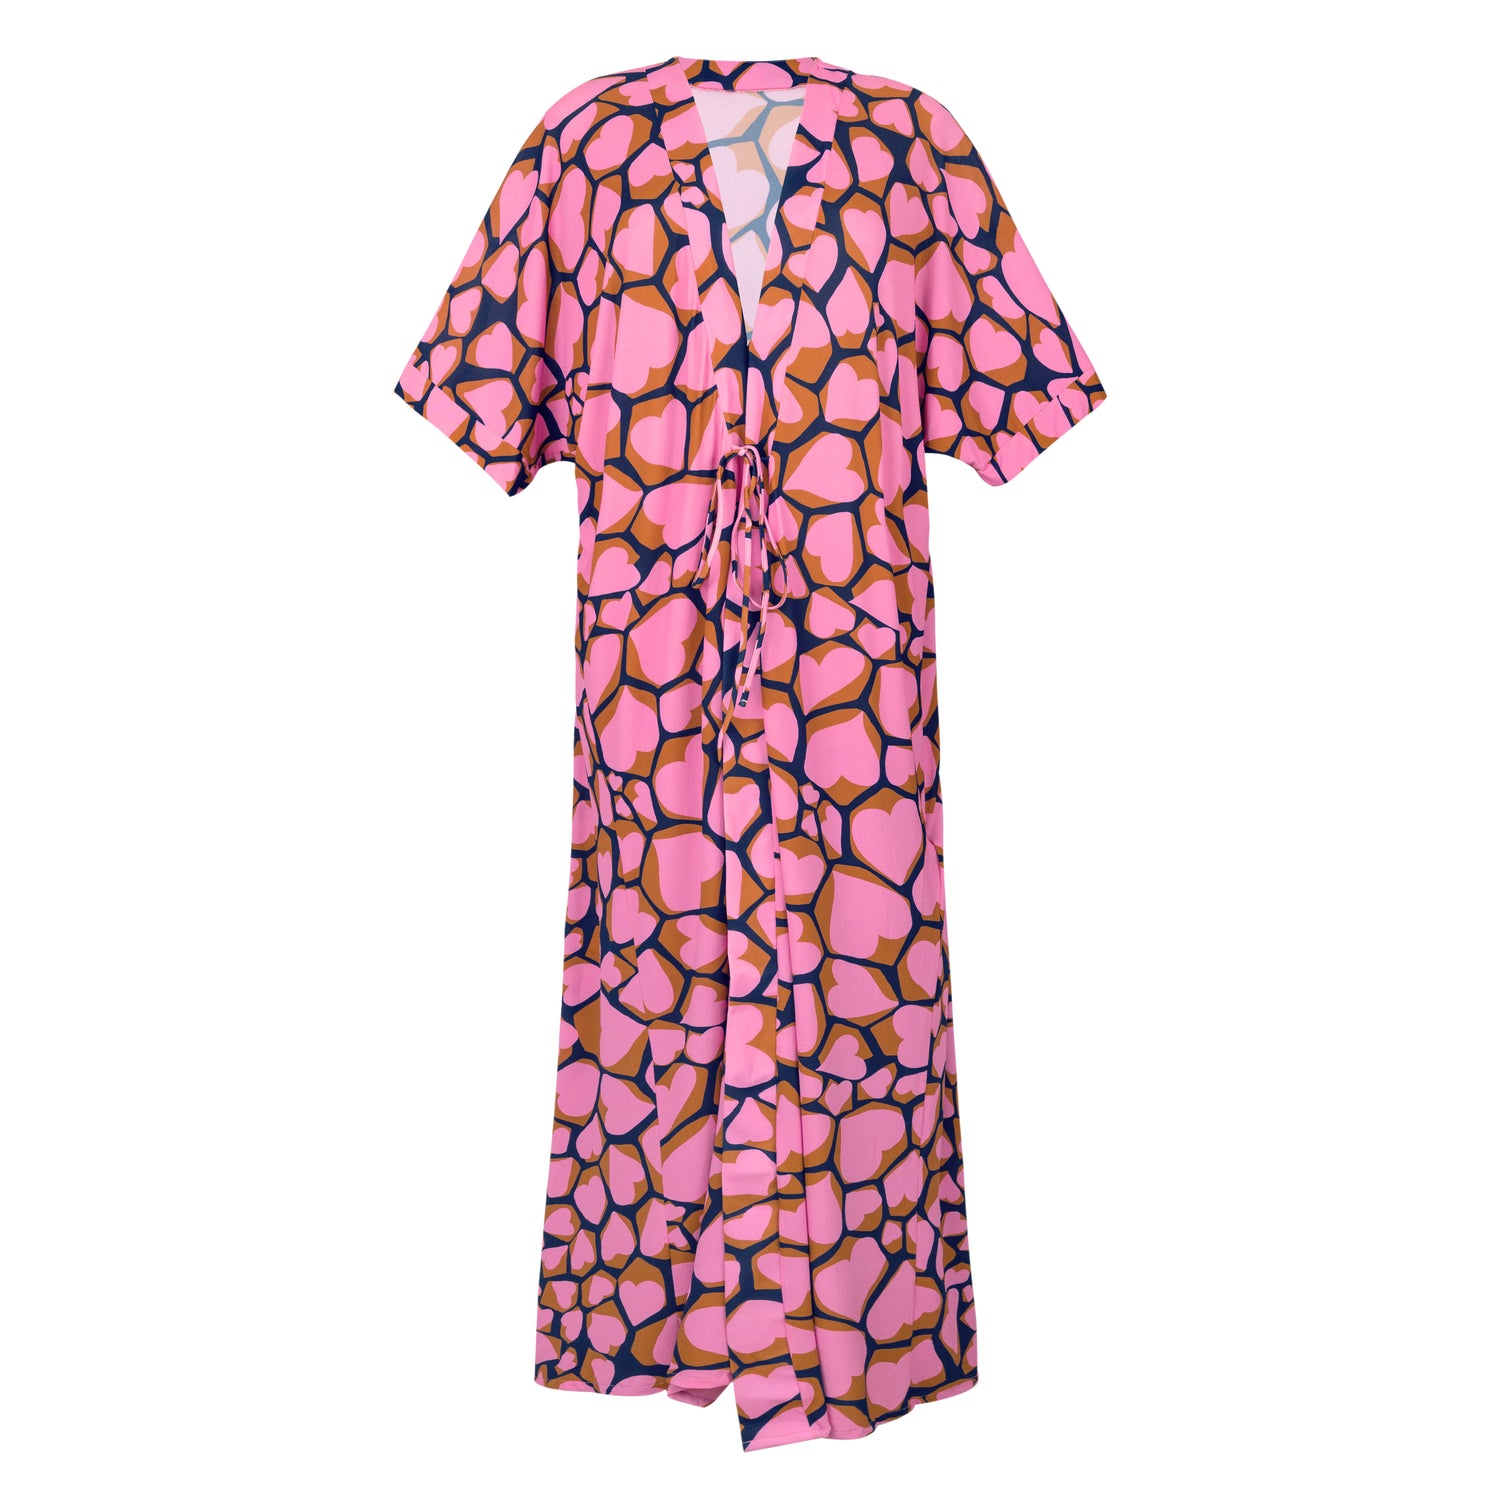 Amore-Pink Long Dress